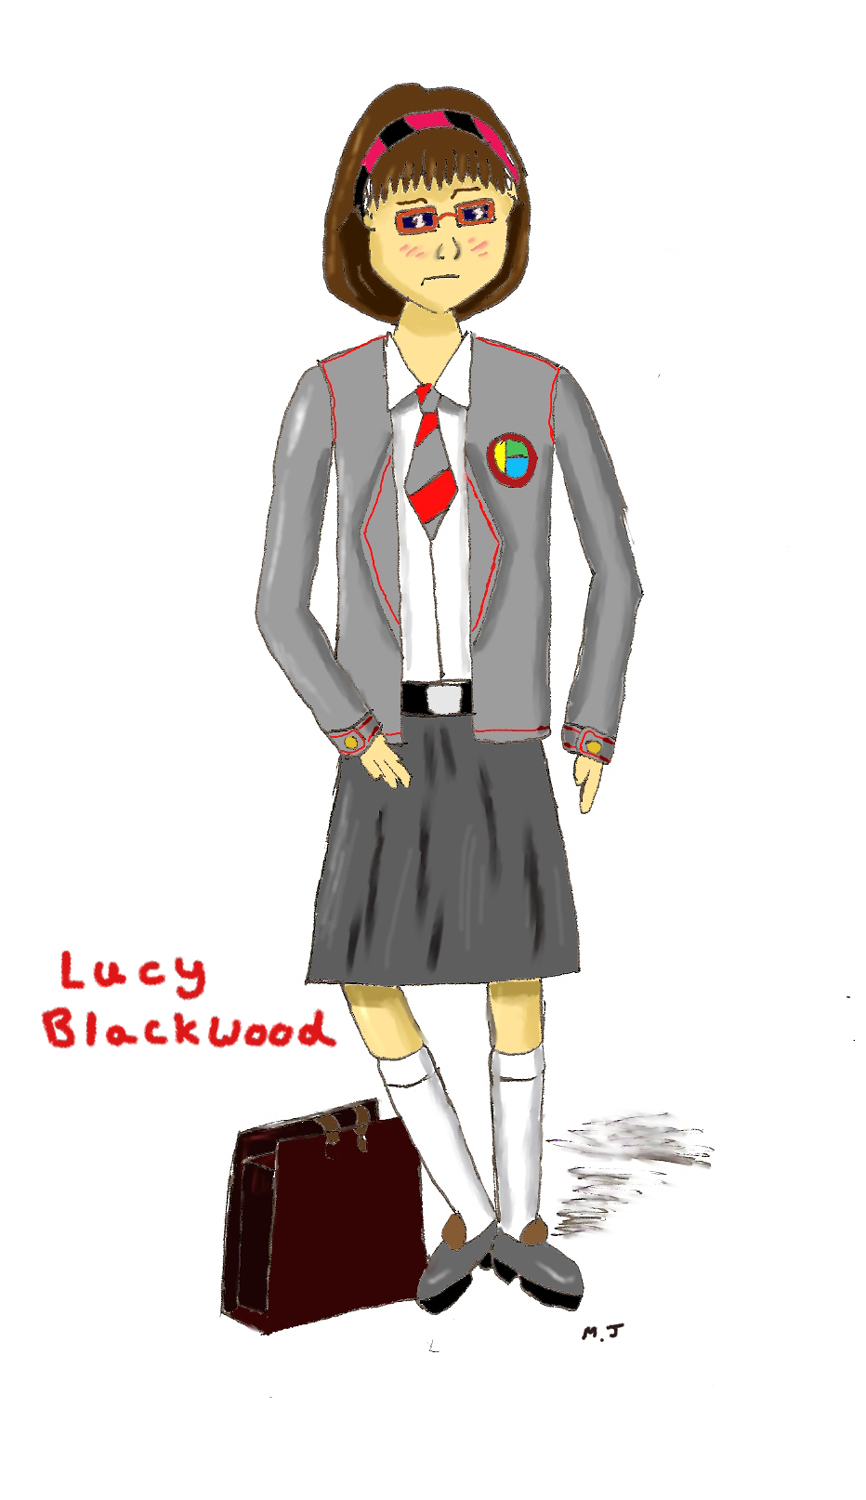 Lucy Blackwood by MJWOOD